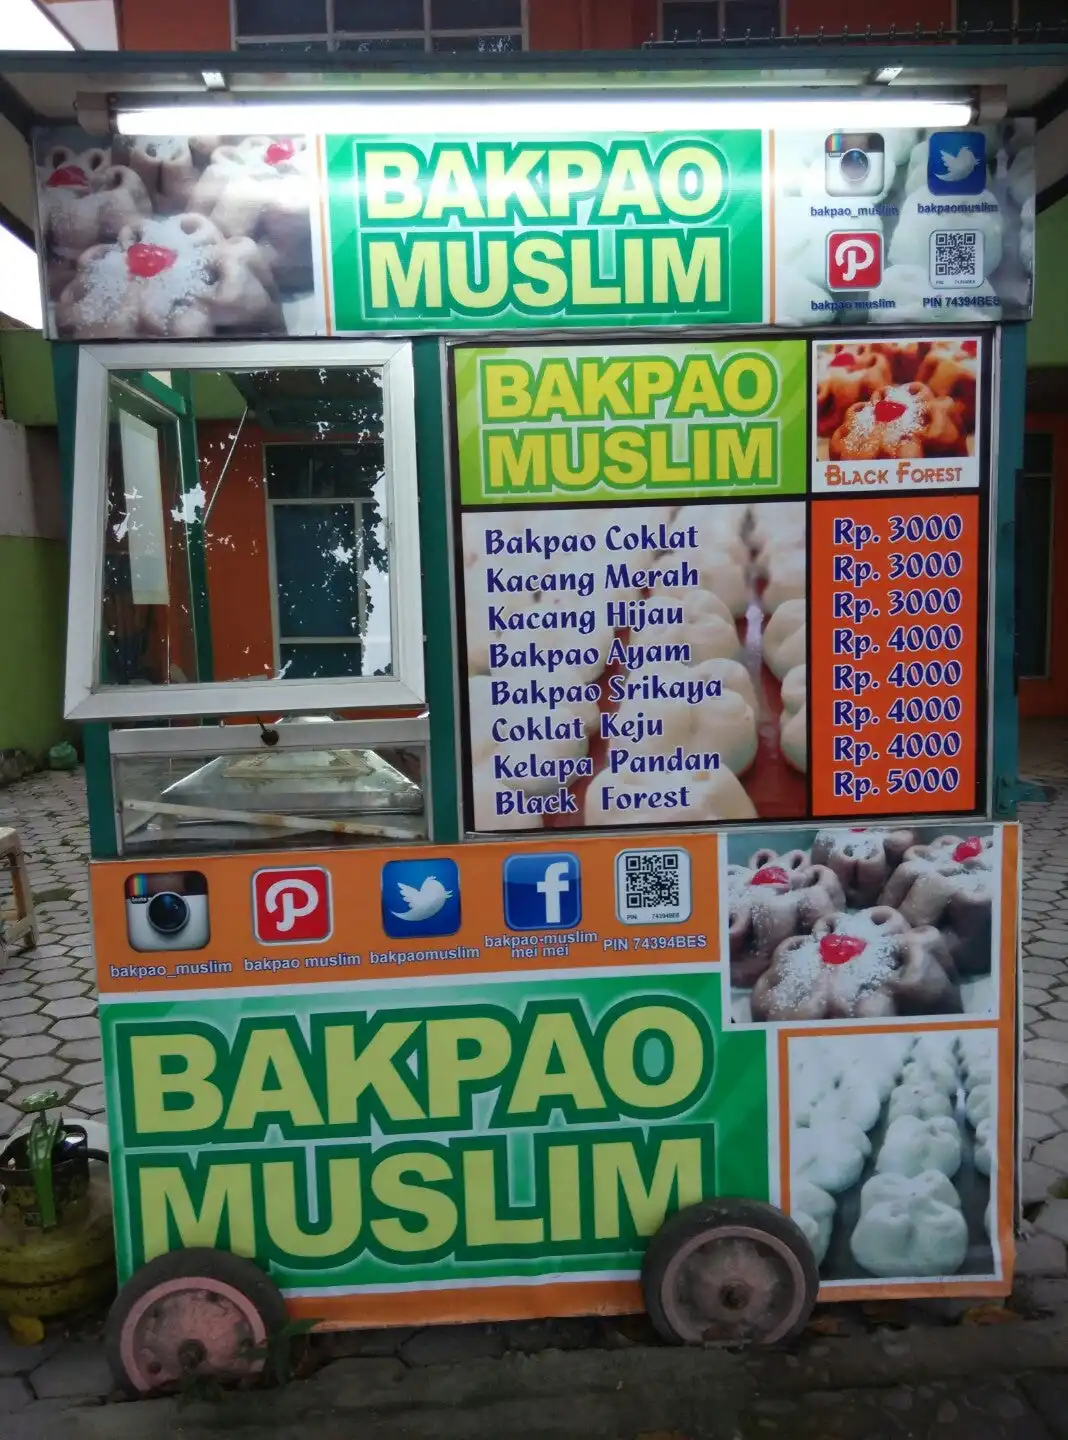 Bakpao Muslim